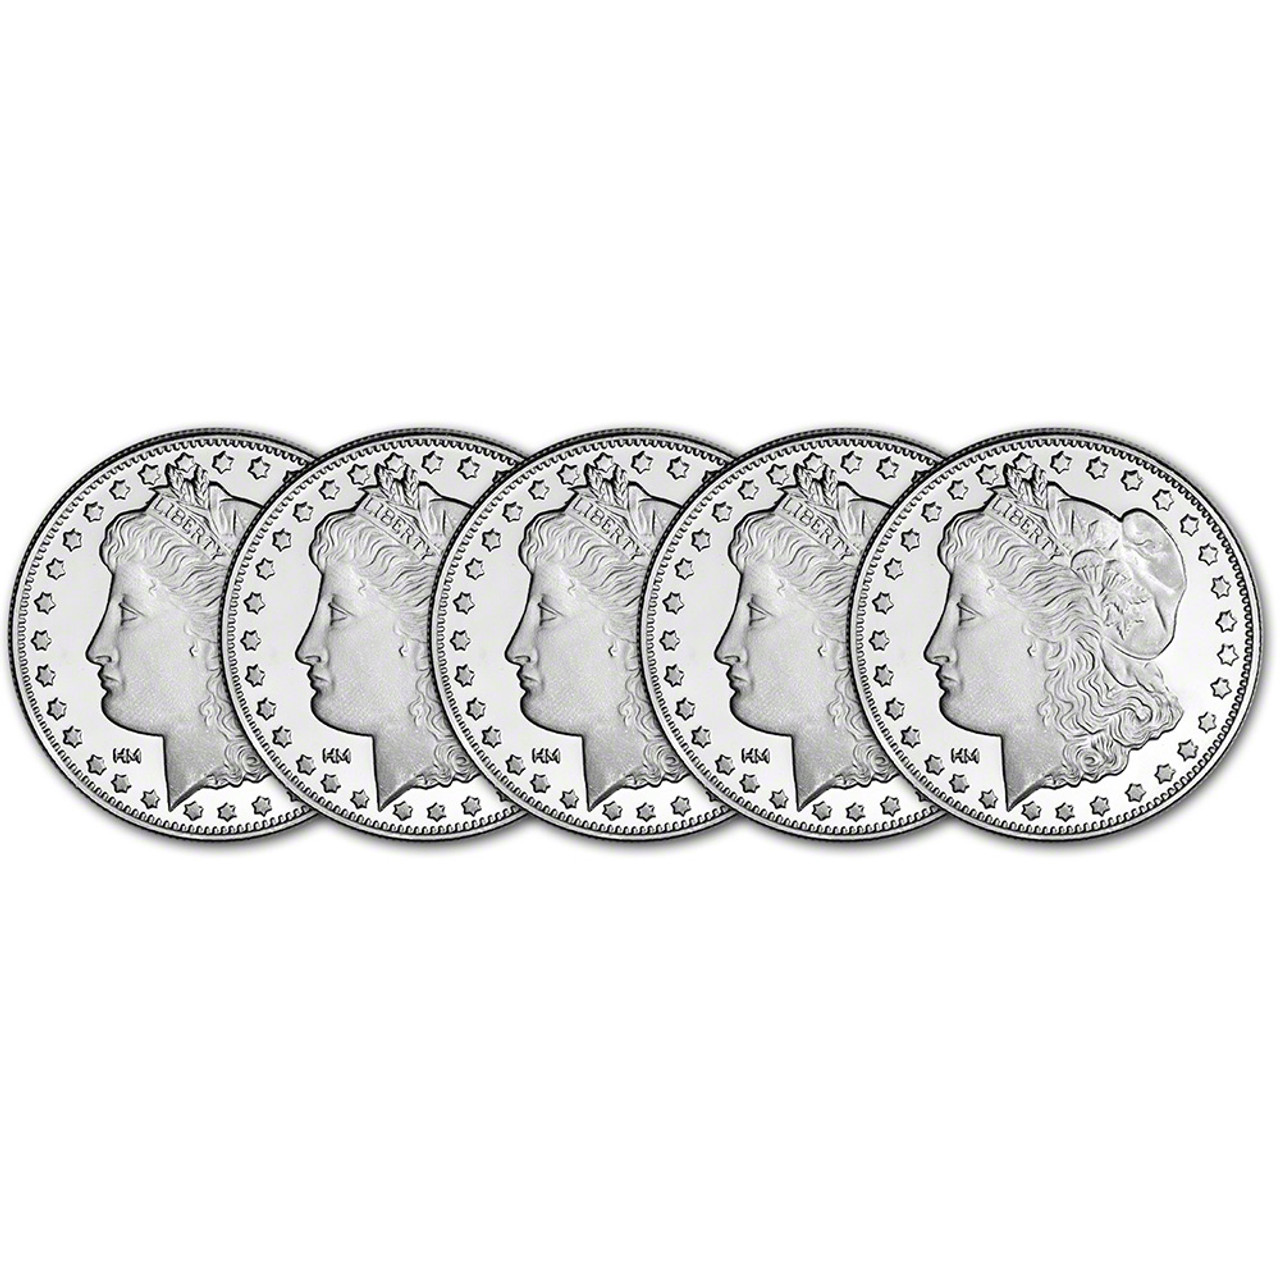 1 oz Silver Round - Morgan Dollar Design 